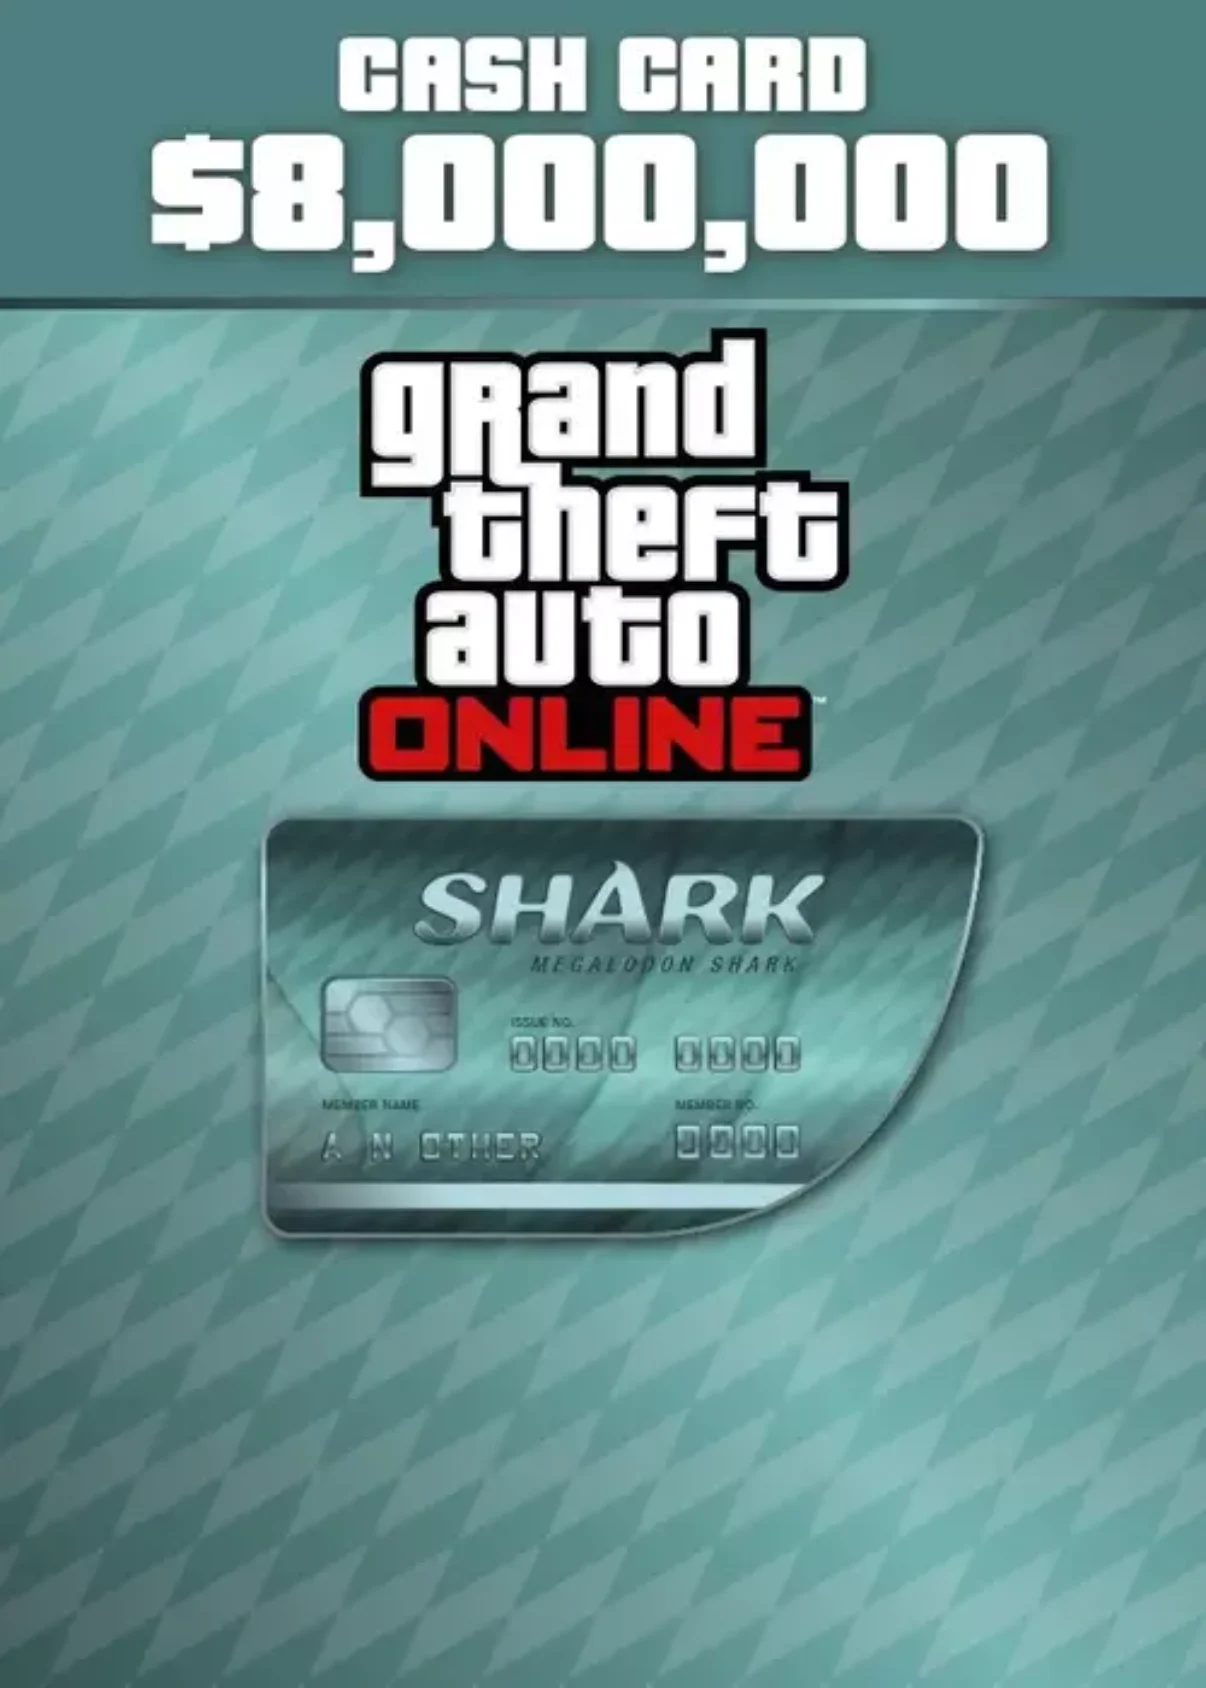 GTA V Megalodon Shark Cash Card